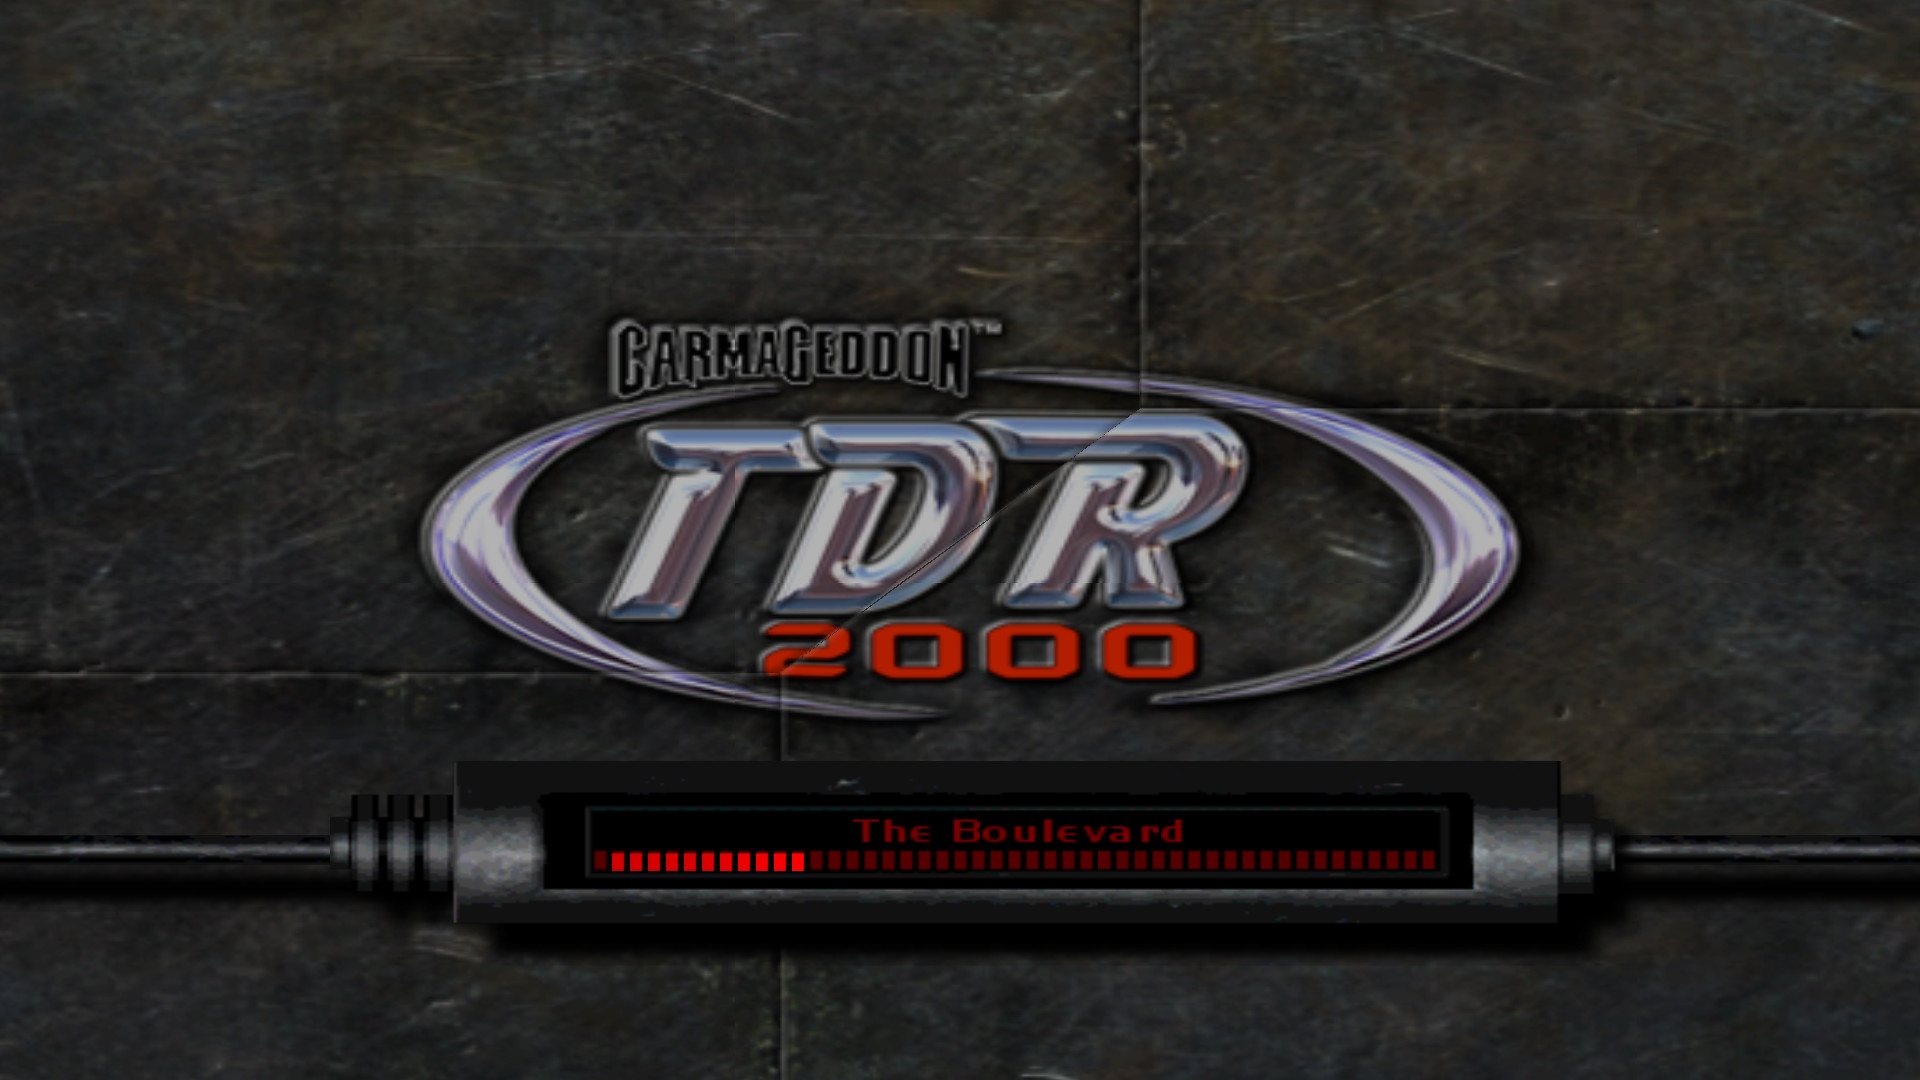 Carmageddon TDR 2000 Steam Gift [USD 3.13]